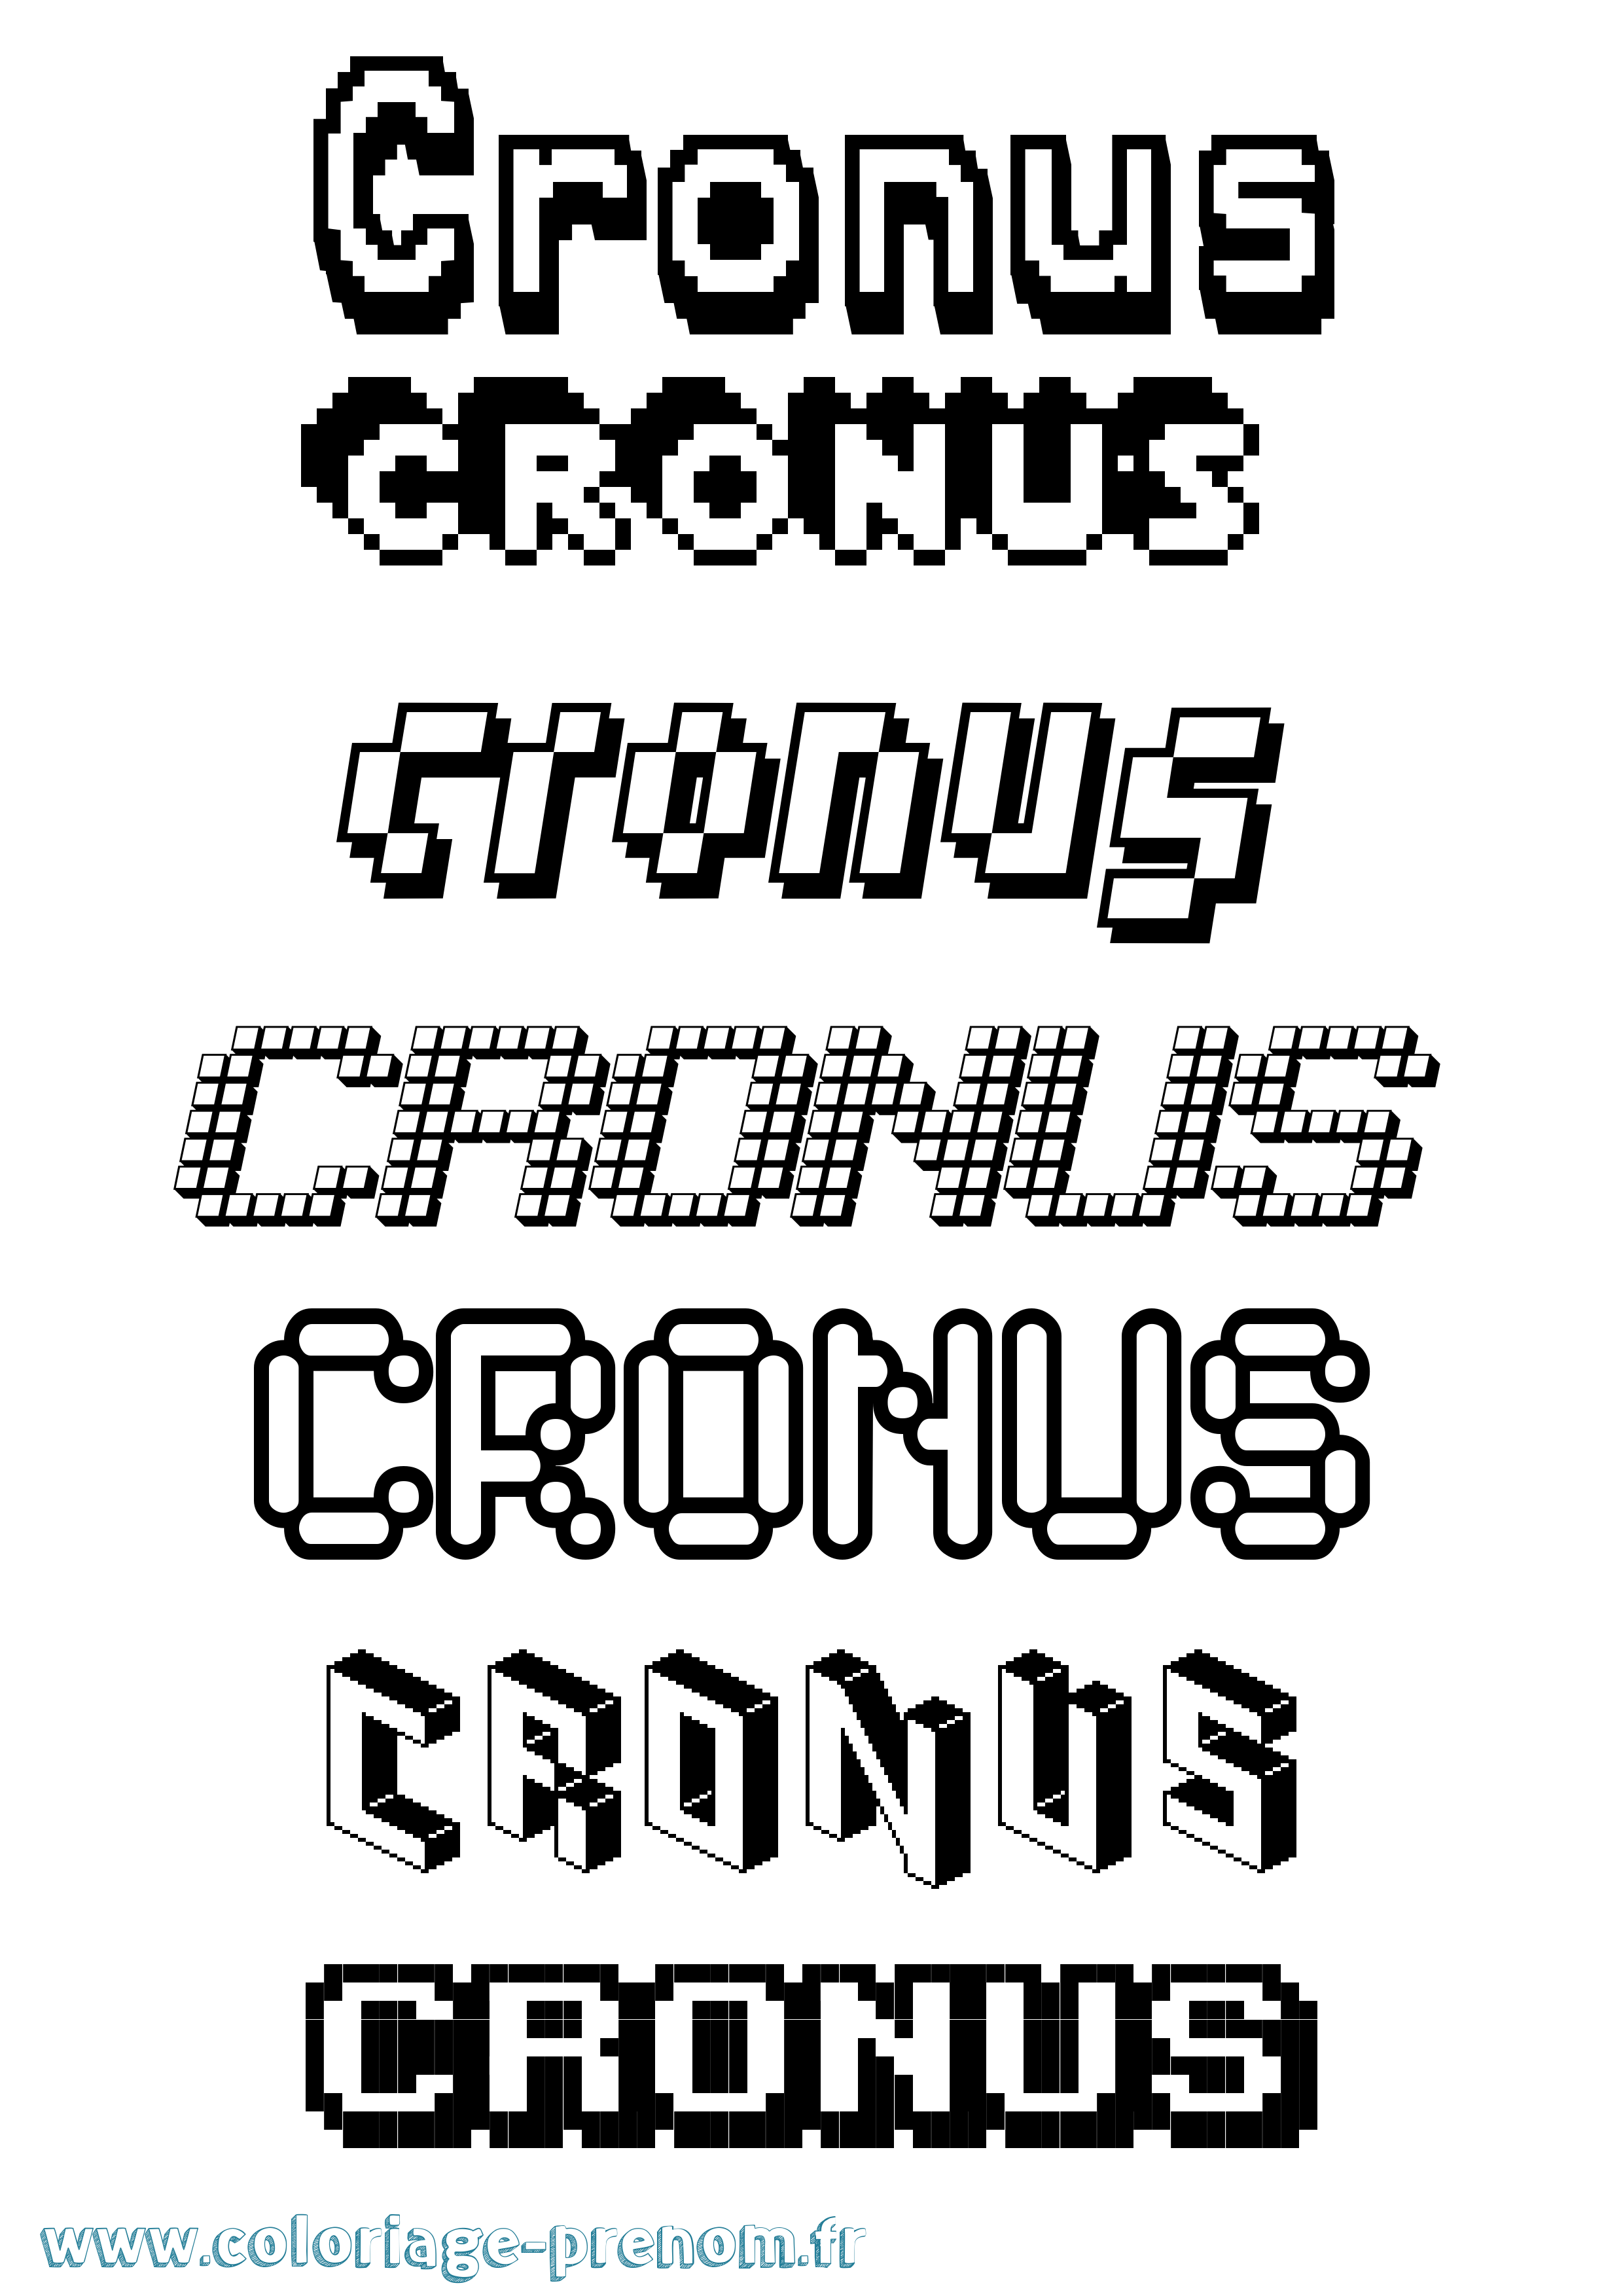 Coloriage prénom Cronus Pixel